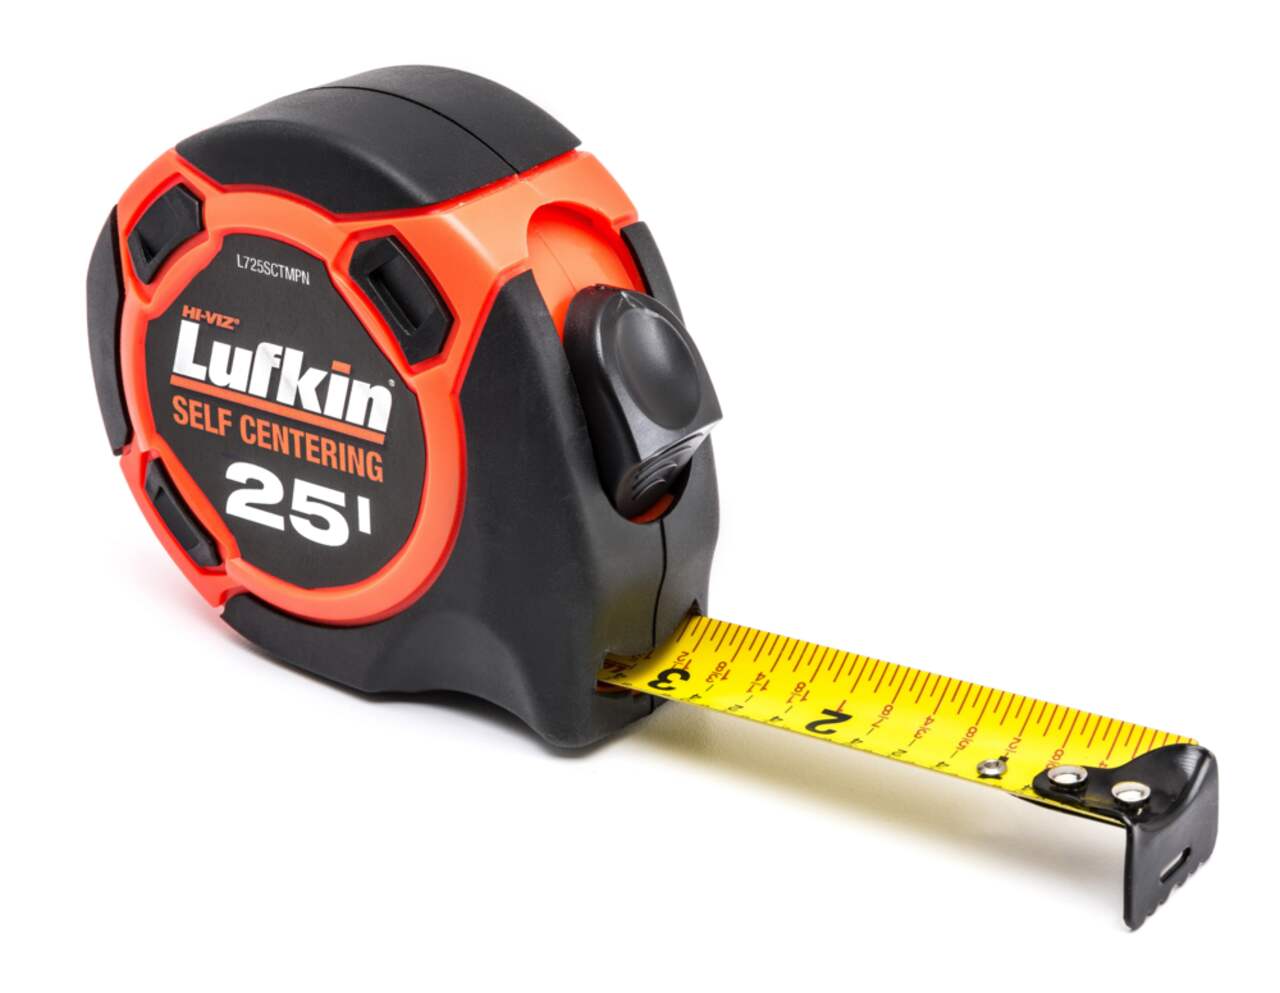 Lufkin L725SCTMPN HI-VIZ Self-Centering Tape Measure, 25-ft